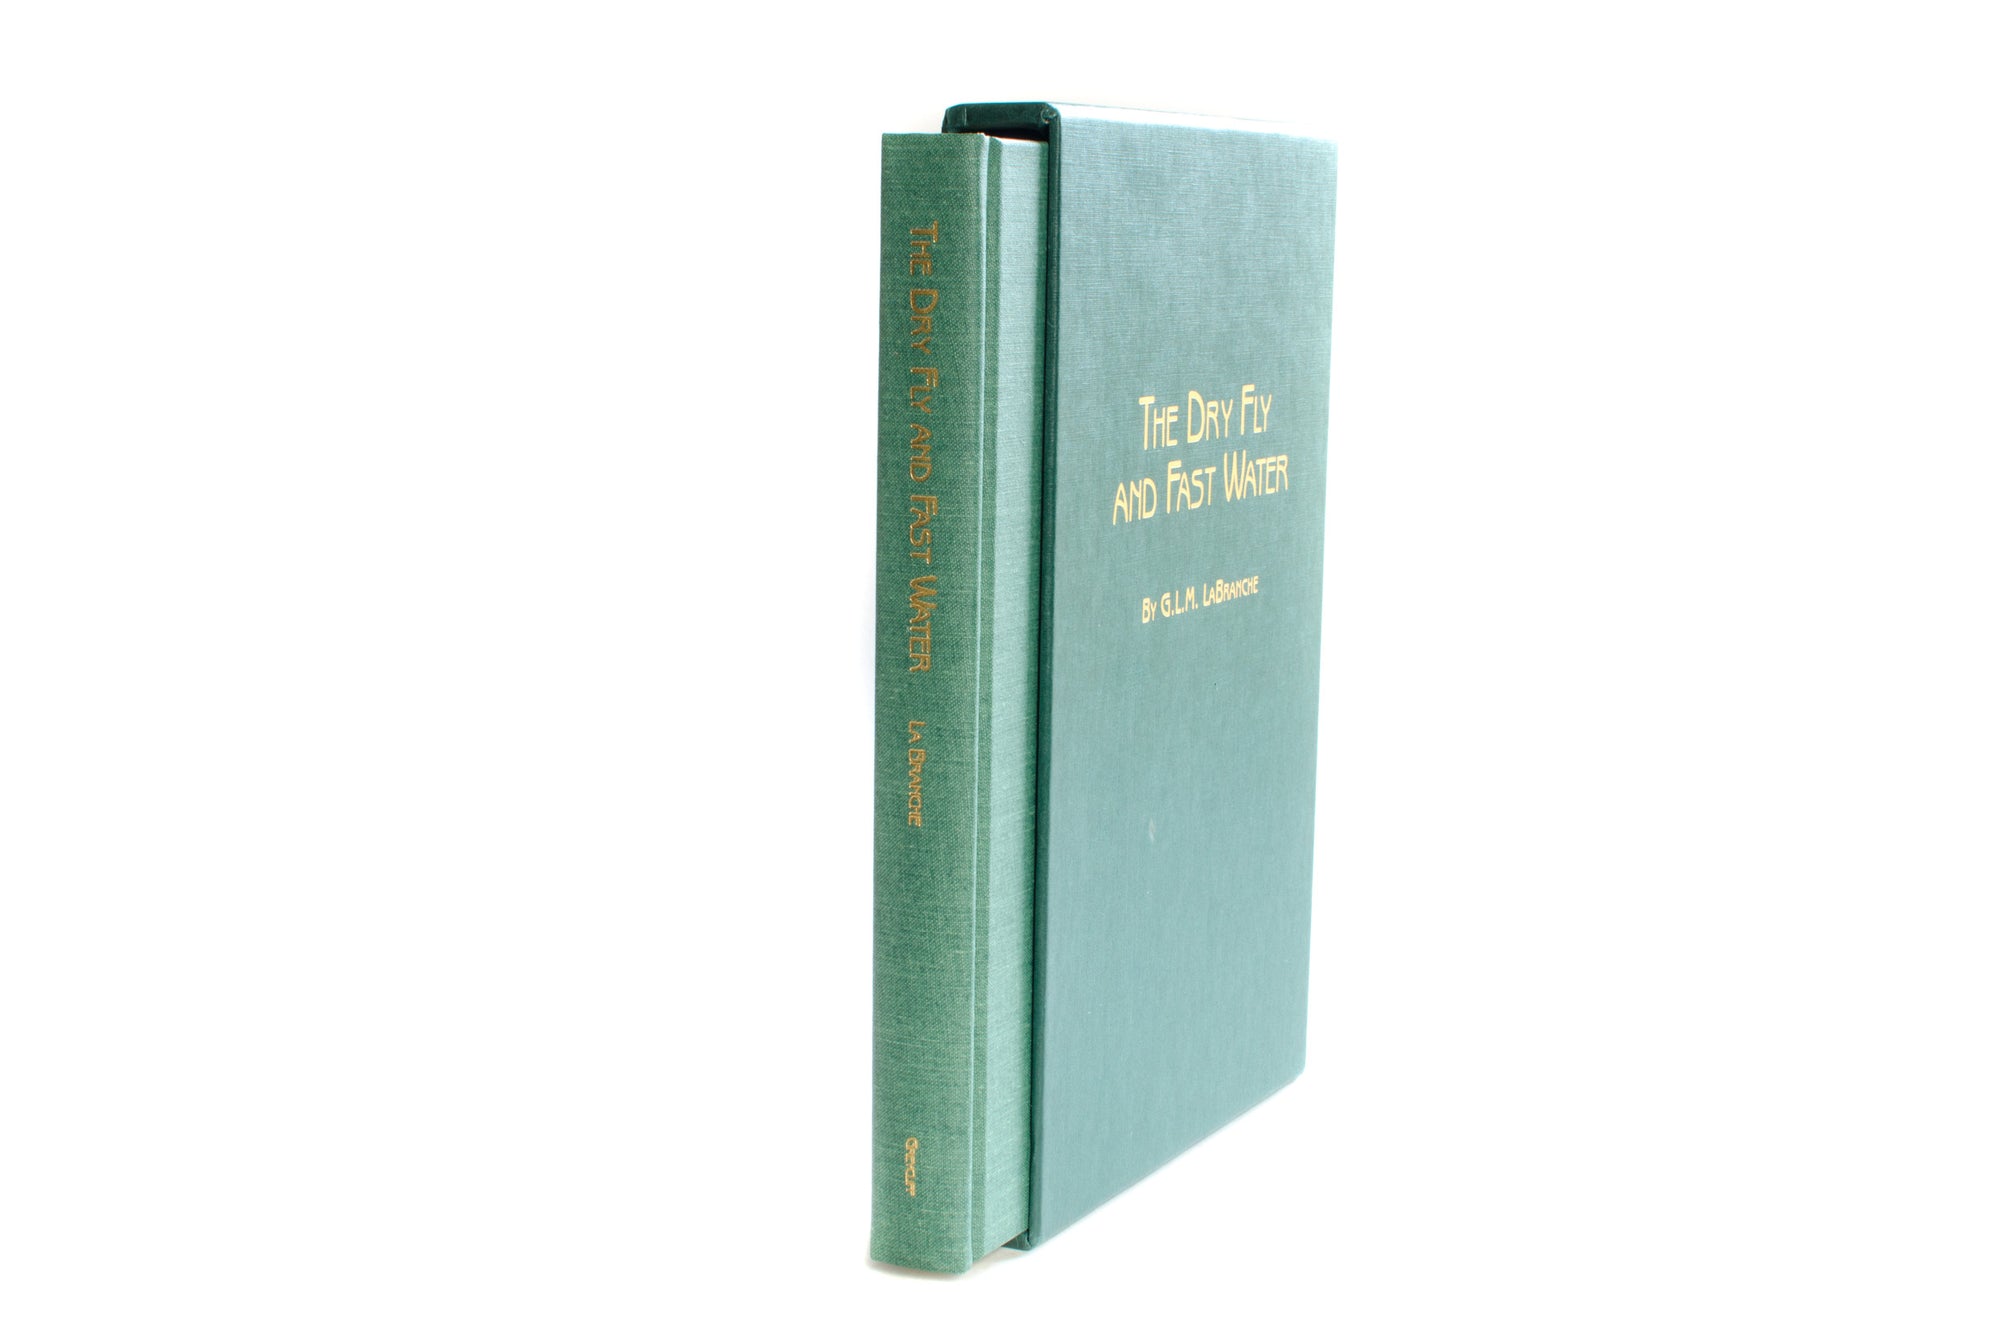 Fishing & Angling Books - Collectible & Rare - Spinoza Rod Company